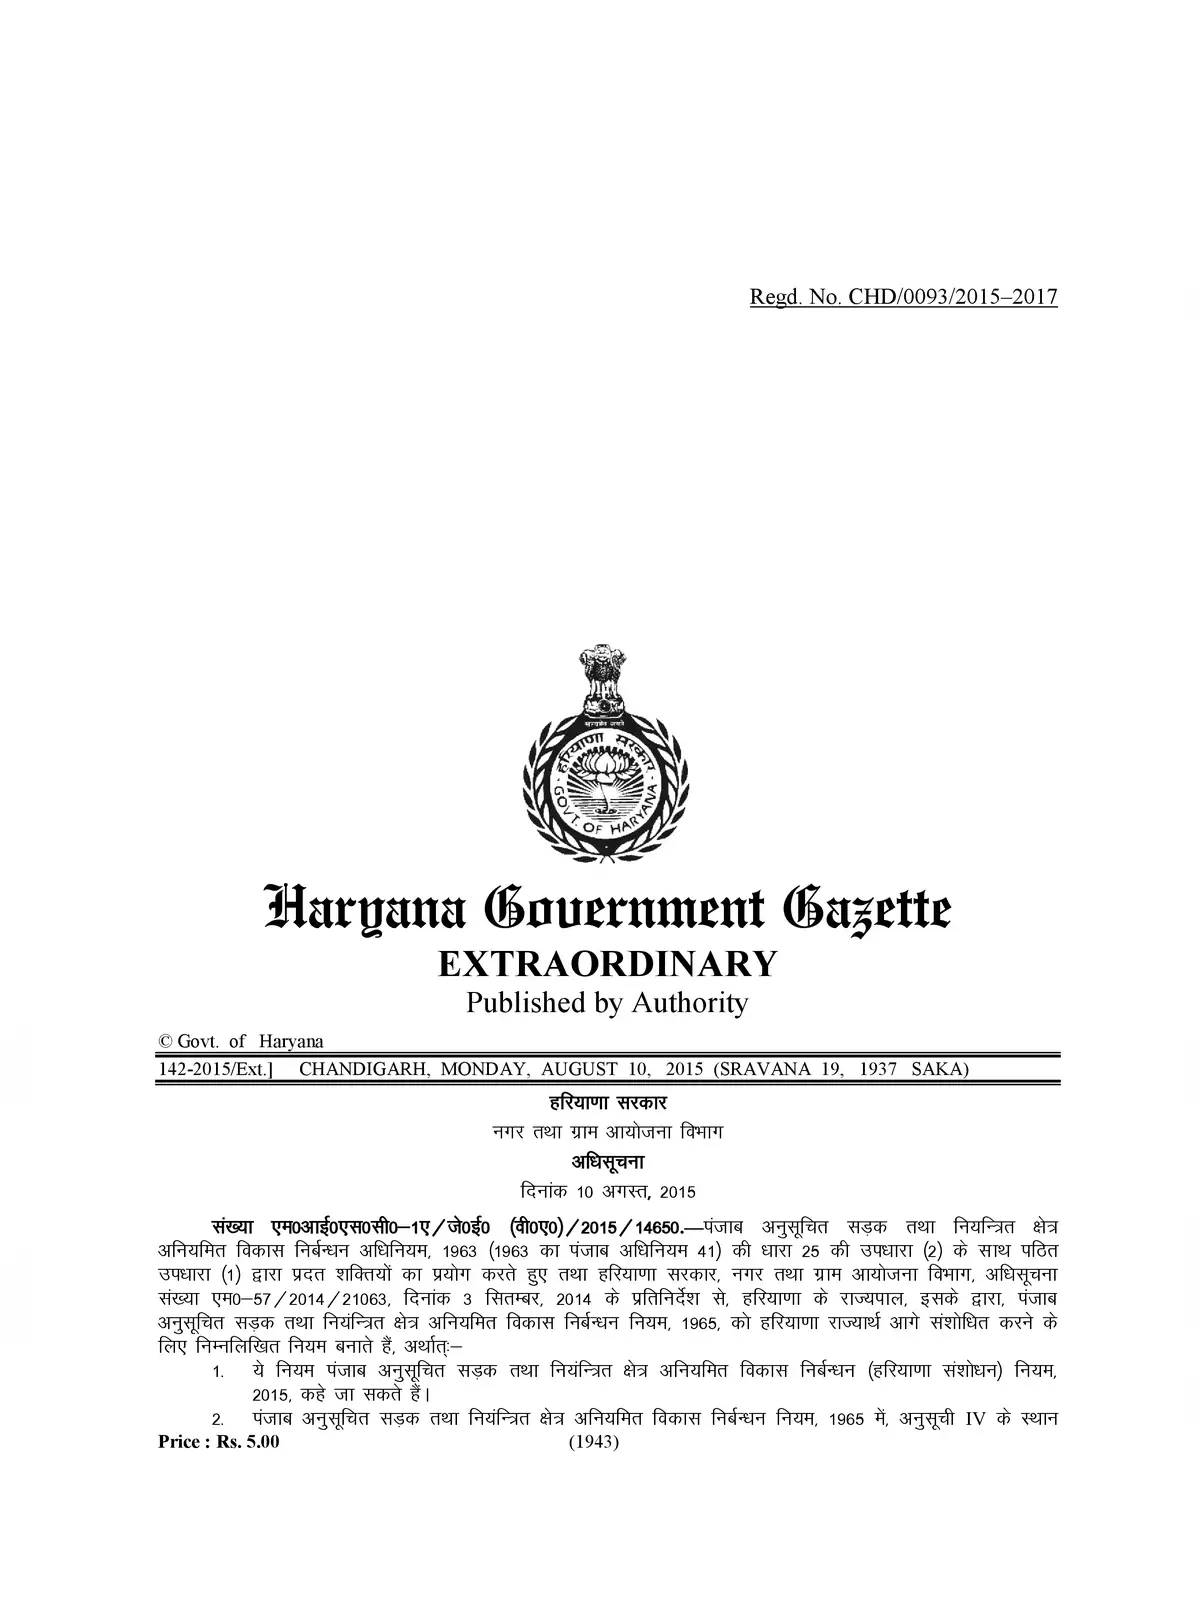 haryana-clu-charges-hindi-pdf